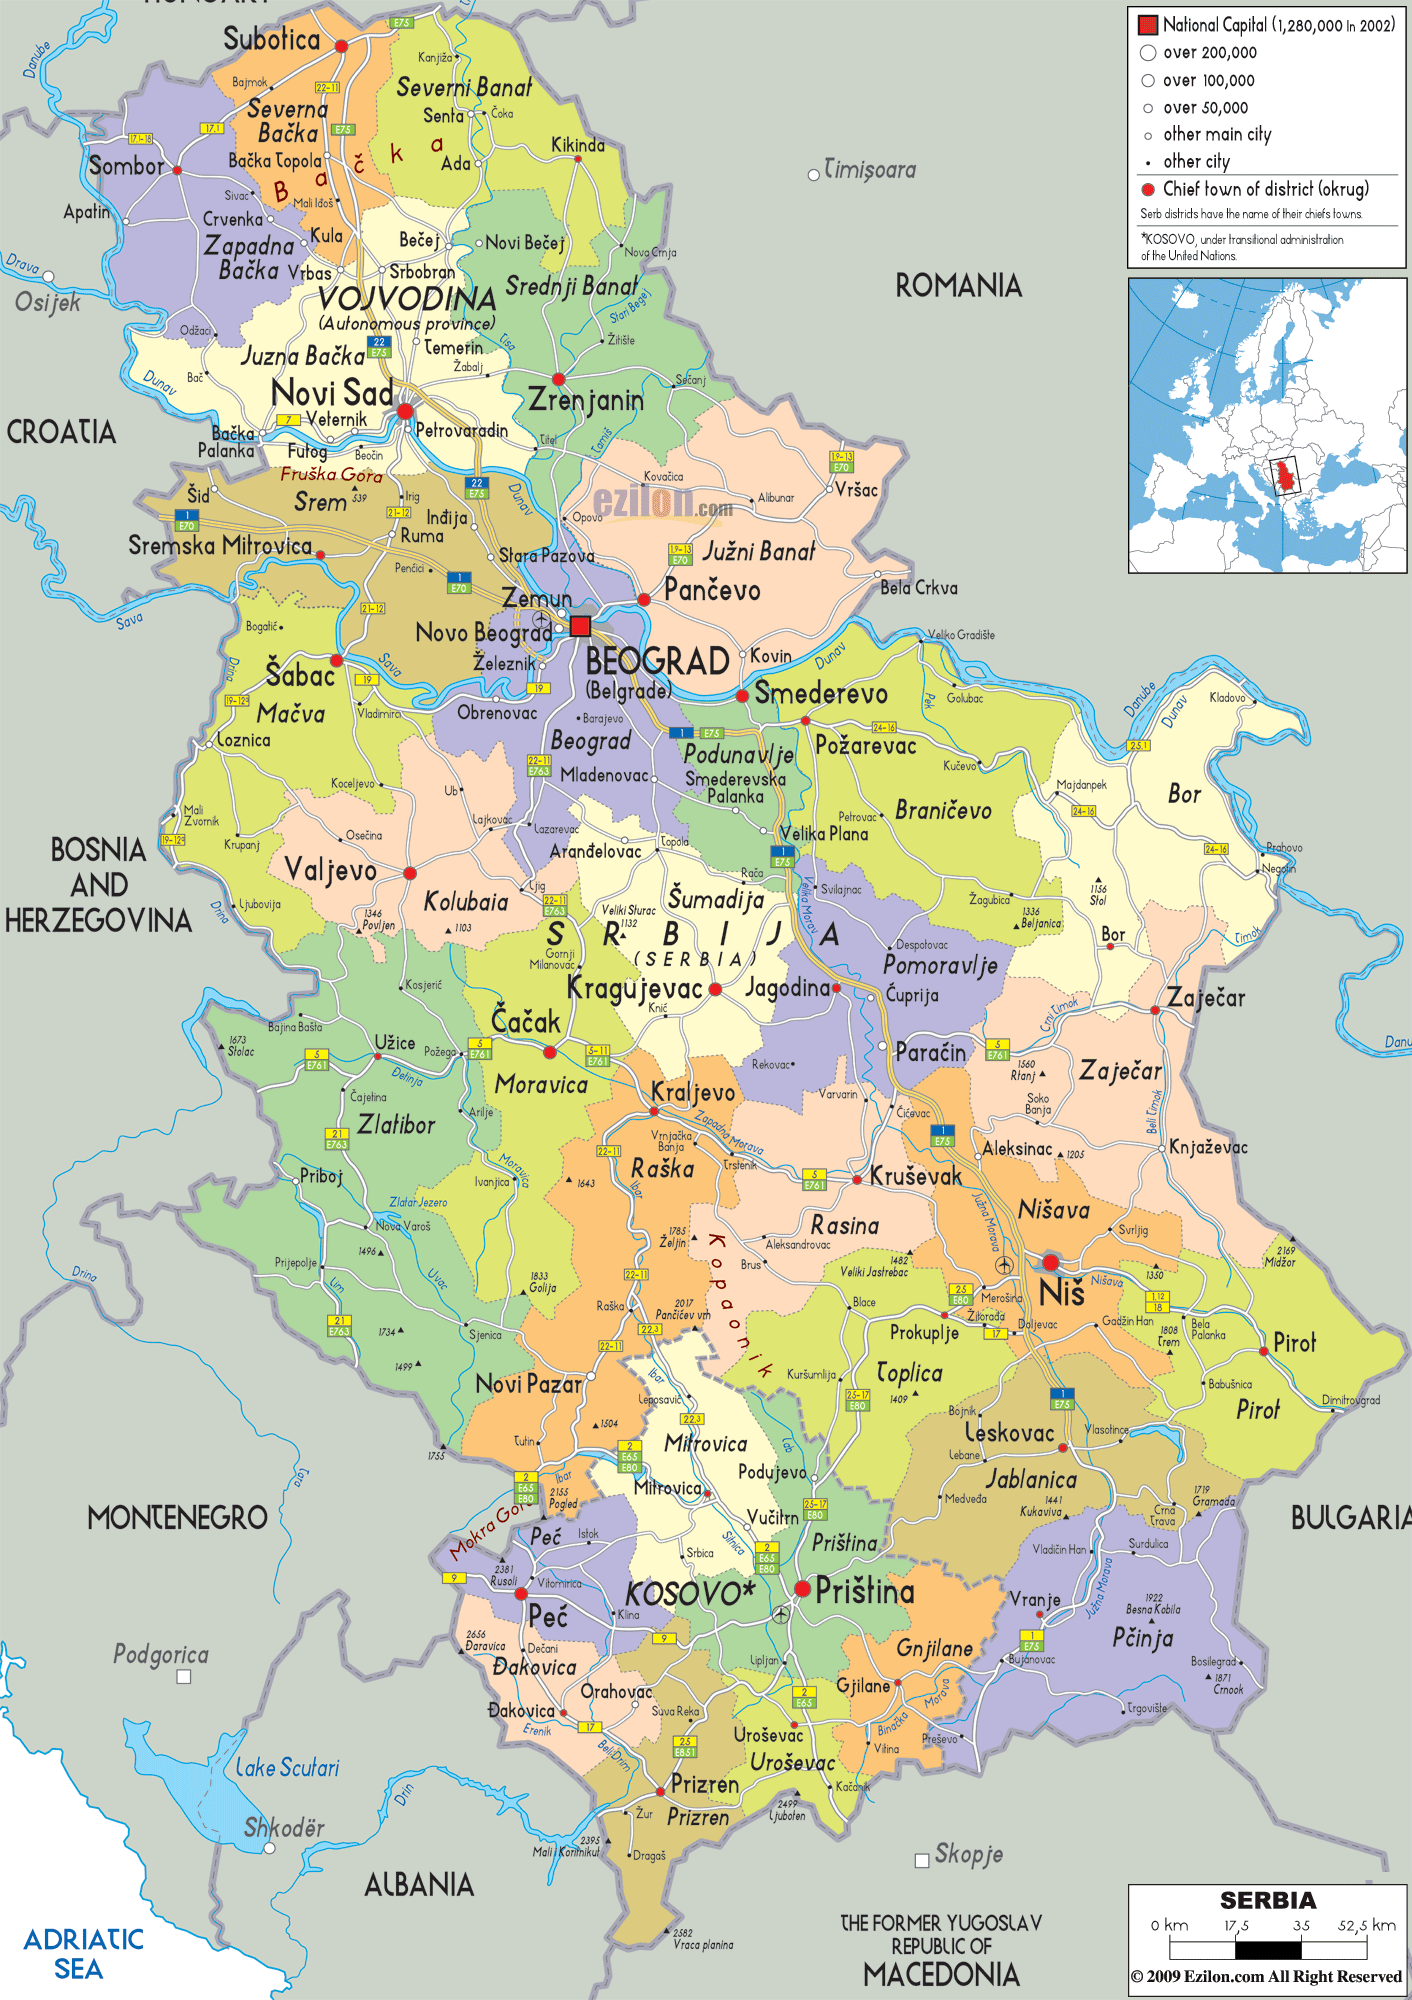 sirbistan siyasi haritasi